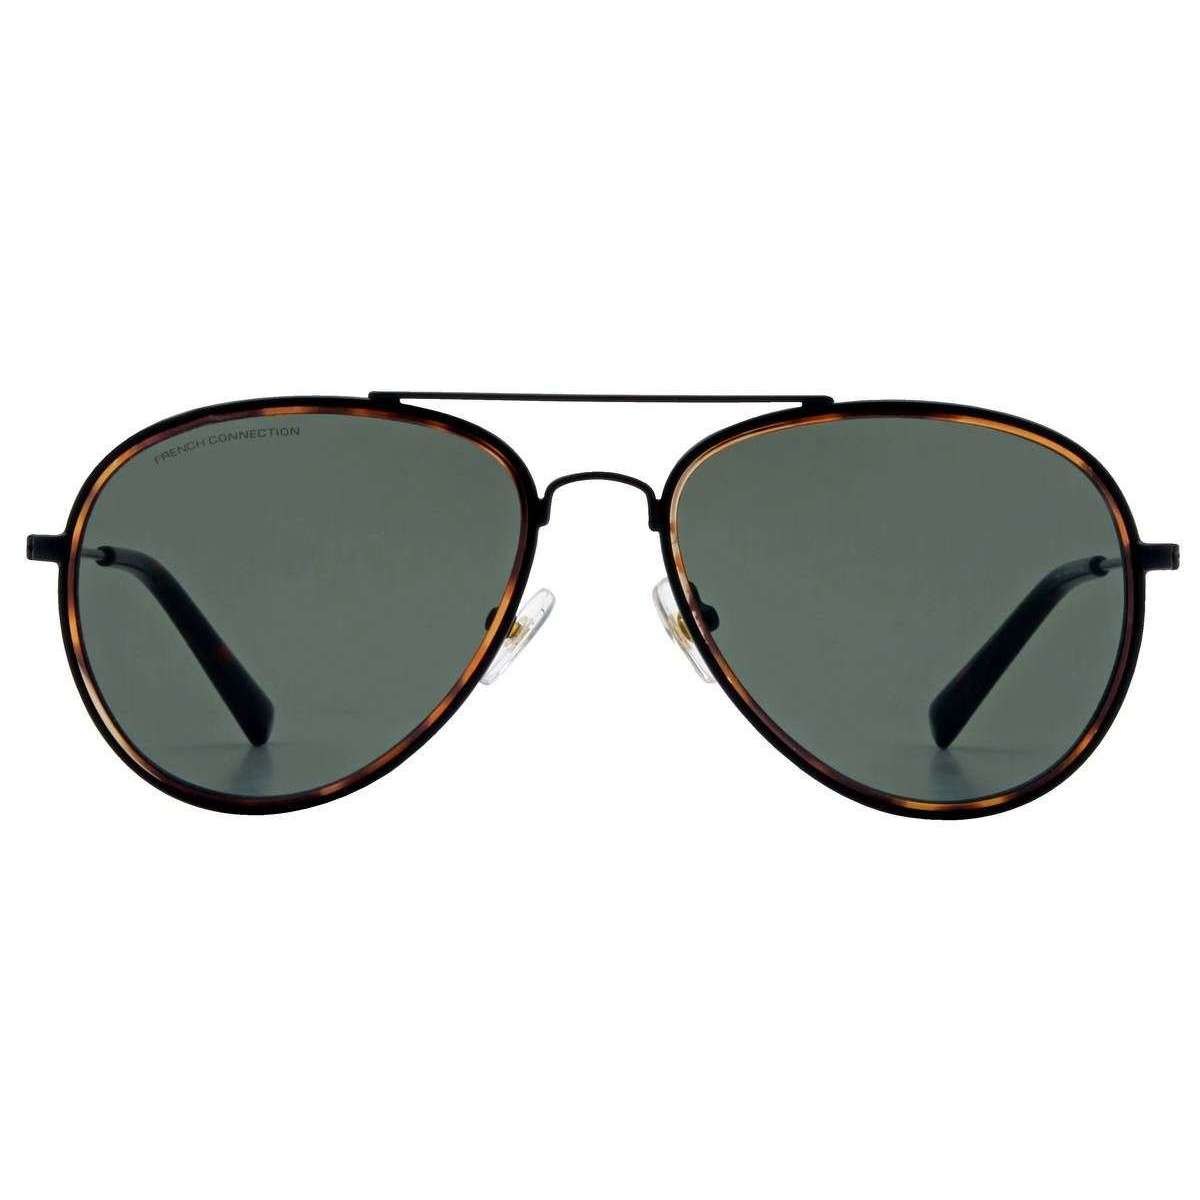 French Connection Metal D-Frame Sunglasses - Matte Black/Tortoise Shell/Green